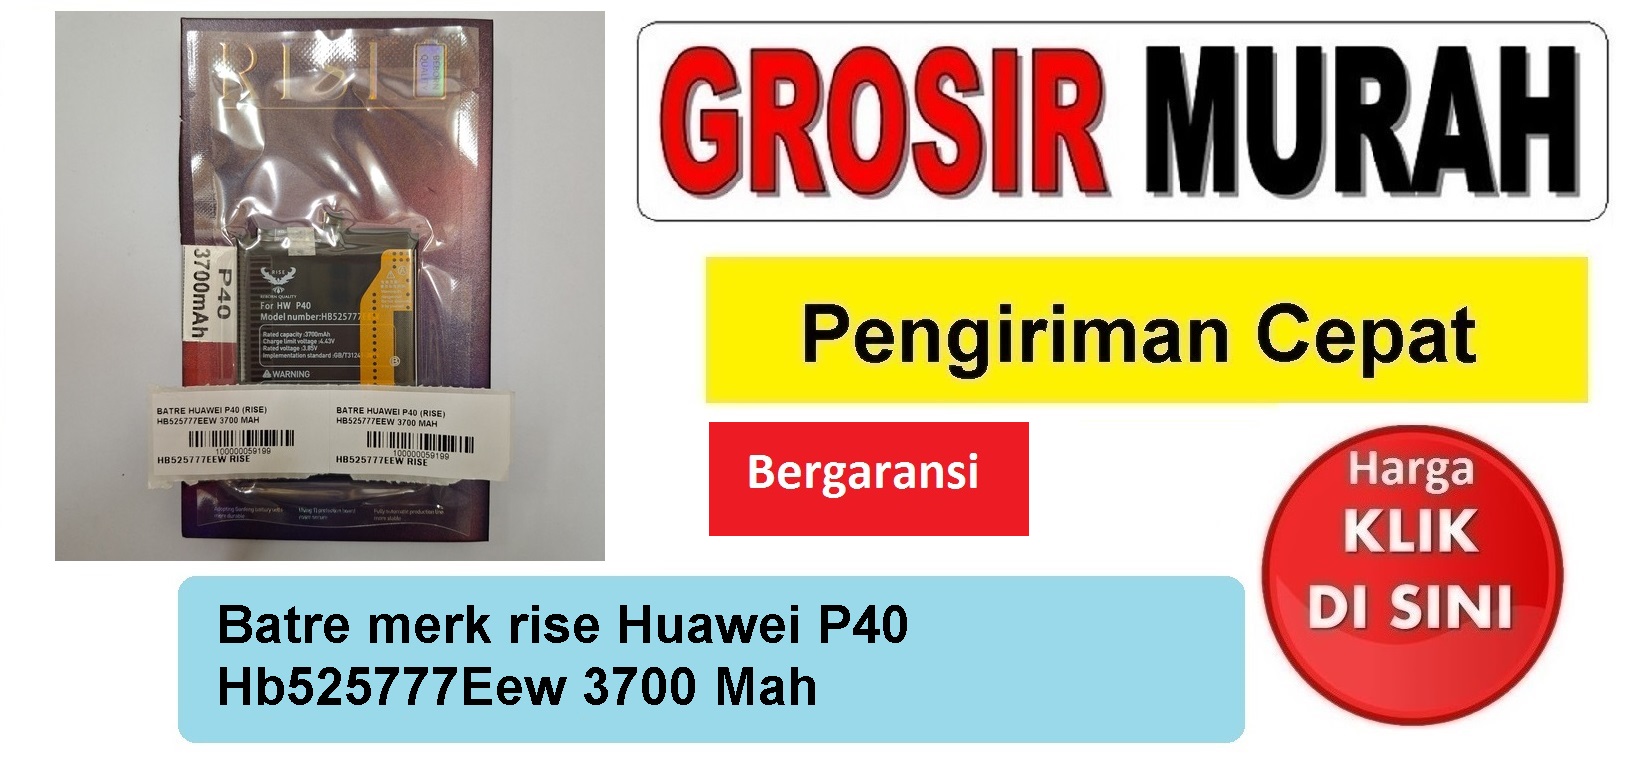 Batre merk rise Huawei P40 Hb525777Eew 3700 Mah Baterai Battery Bergaransi Batere